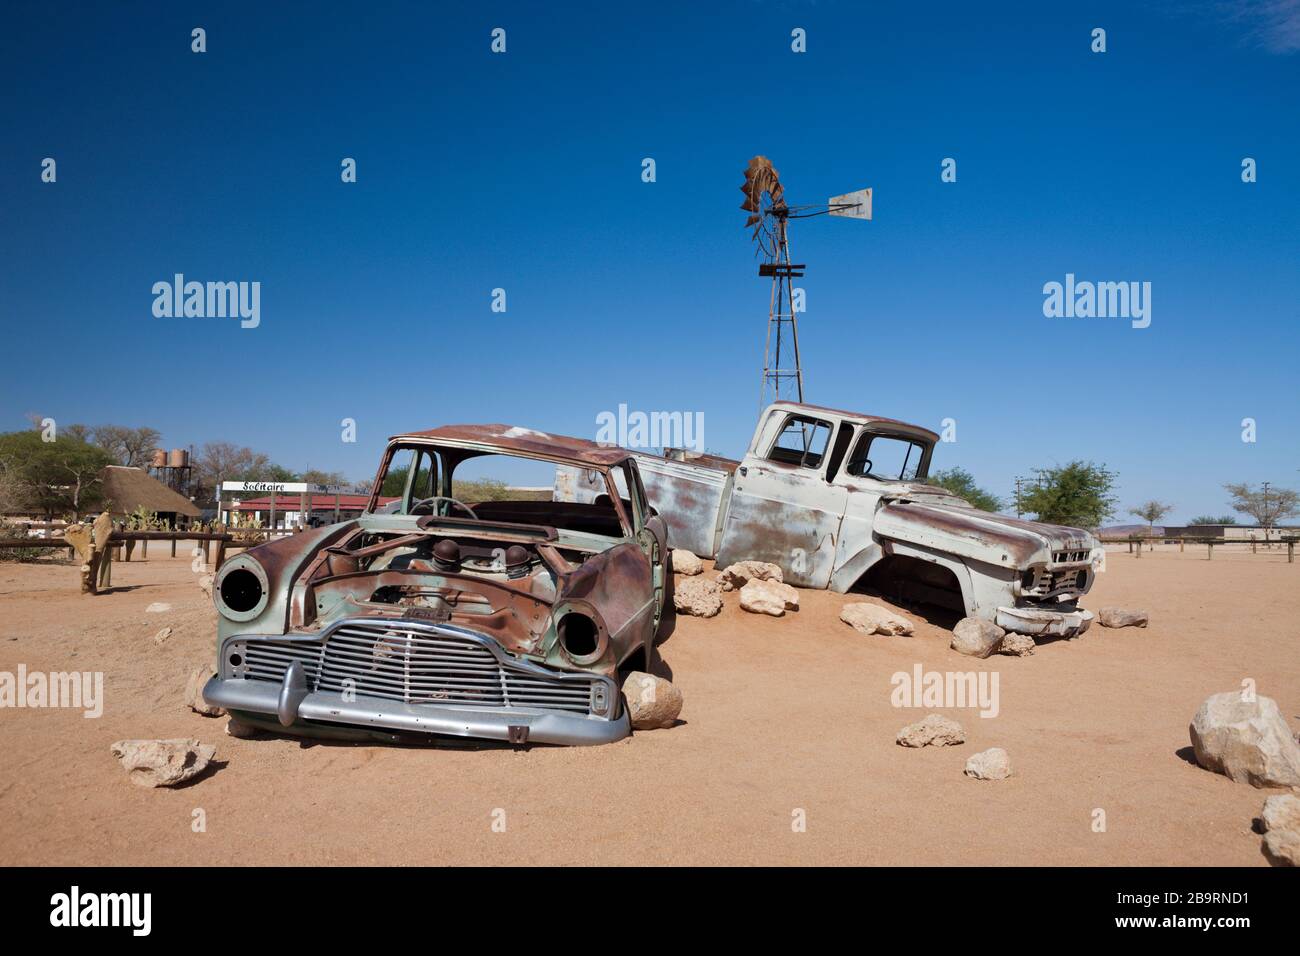 Car Wreck at Solitaire, Namib Naukluft Park, Namibia Stock Photo